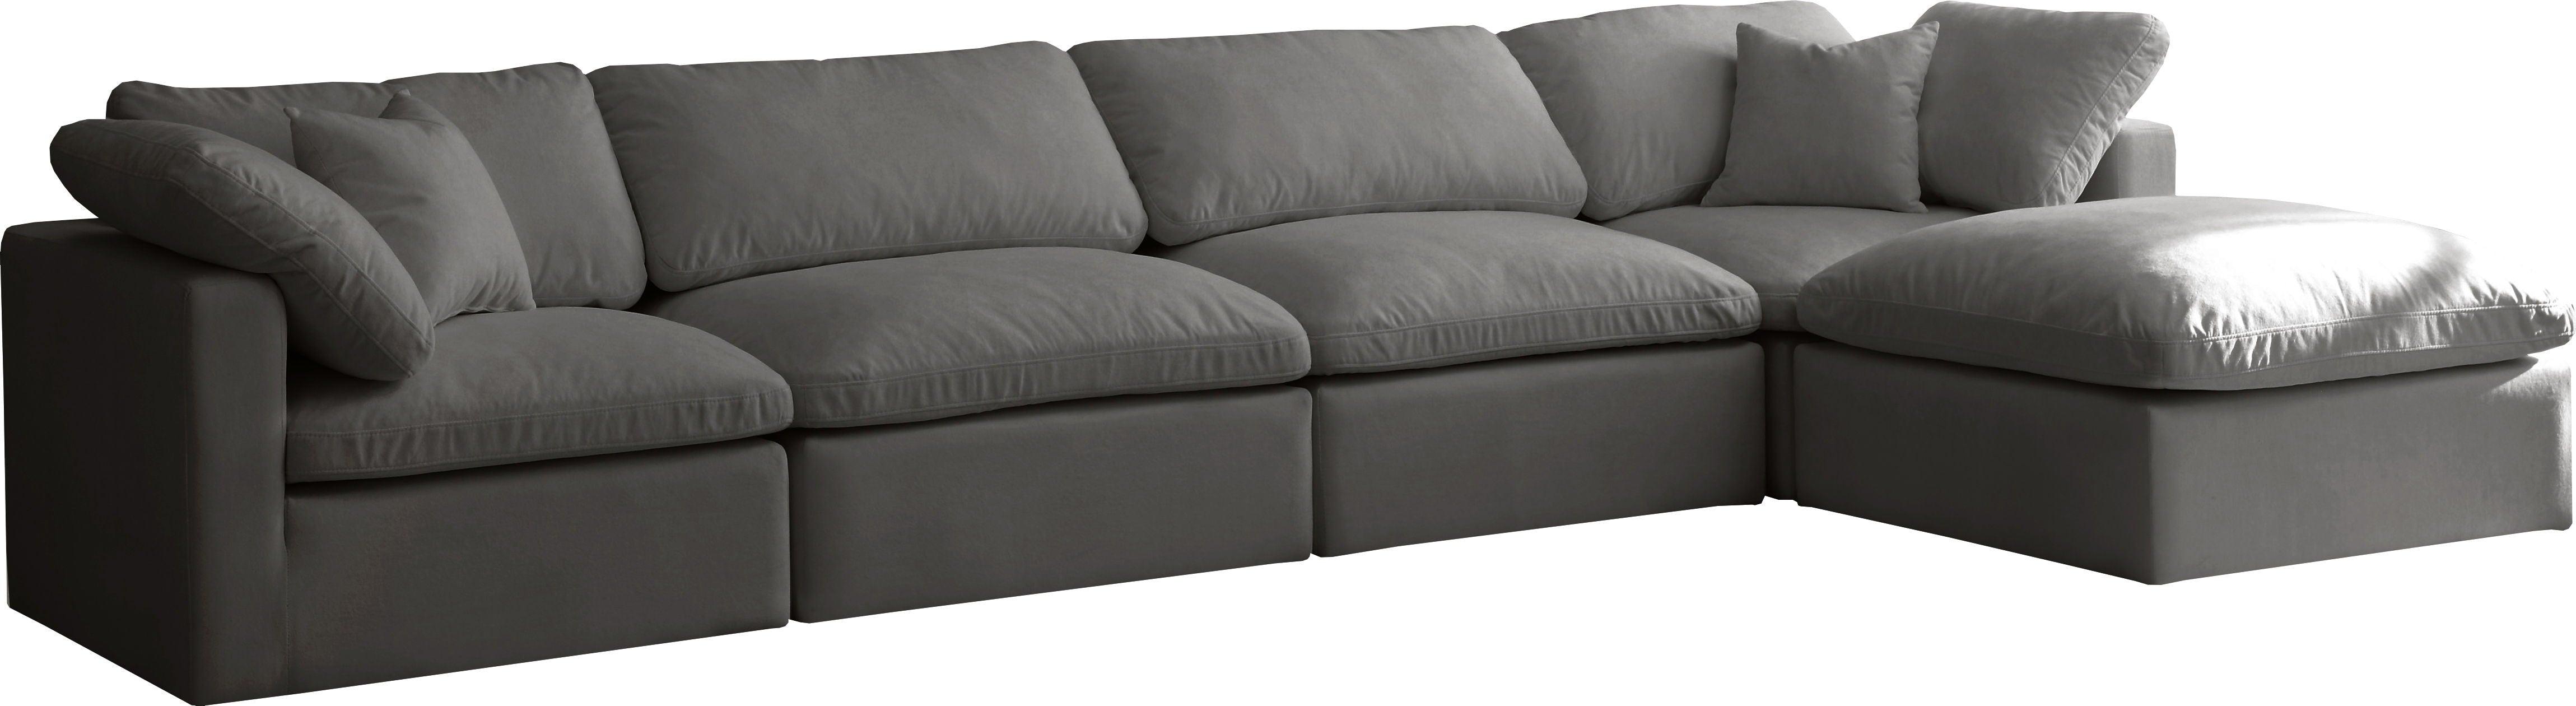 Meridian Furniture - Plush - Velvet Standart Comfort Modular Sectional 4 Piece - Grey - Fabric - 5th Avenue Furniture